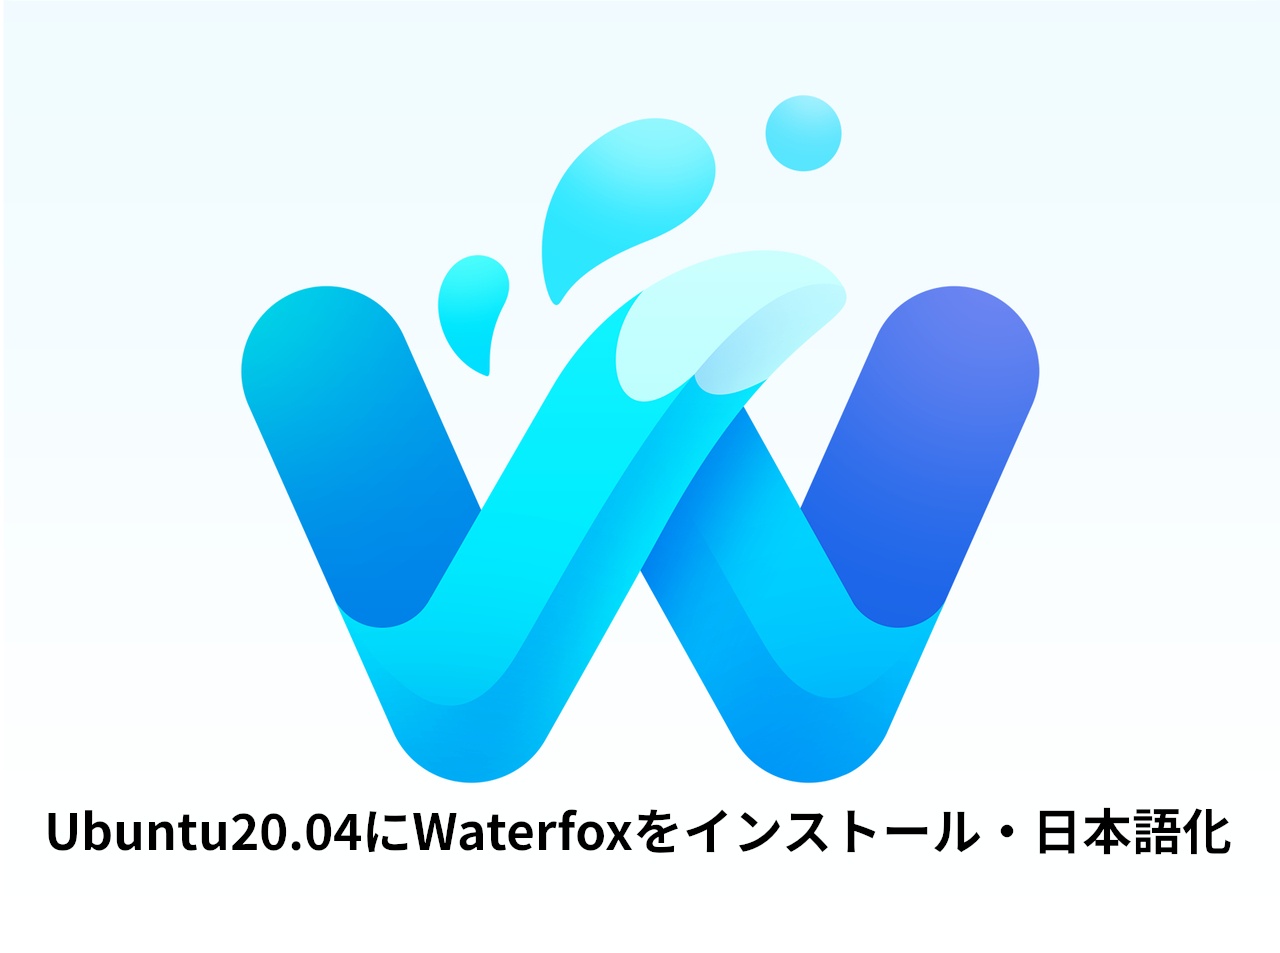 waterfox ubuntu